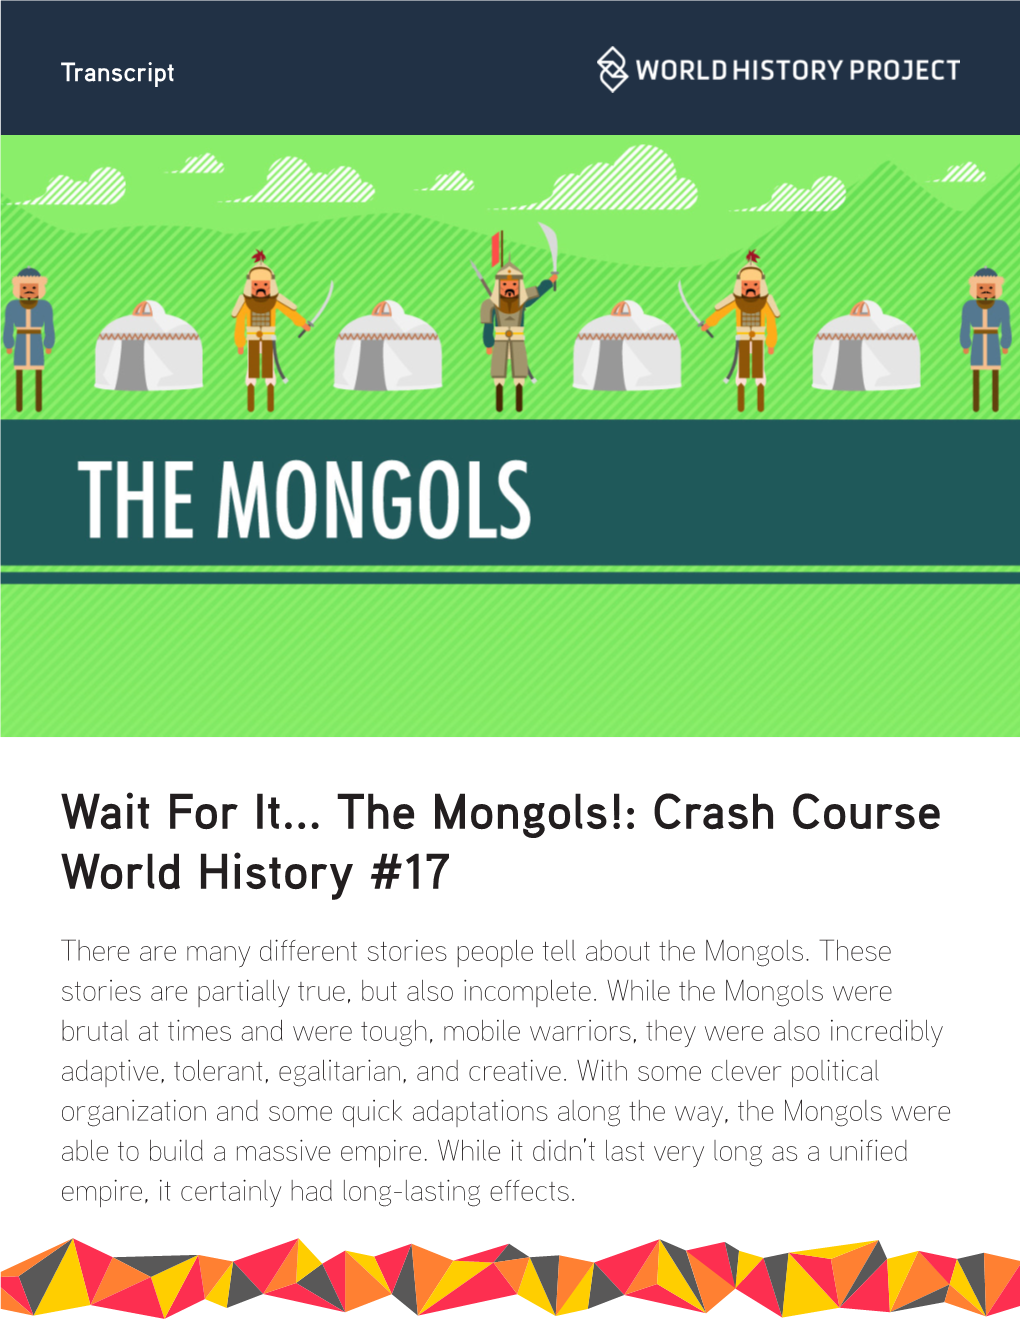 Wait for It... the Mongols!: Crash Course World History #17